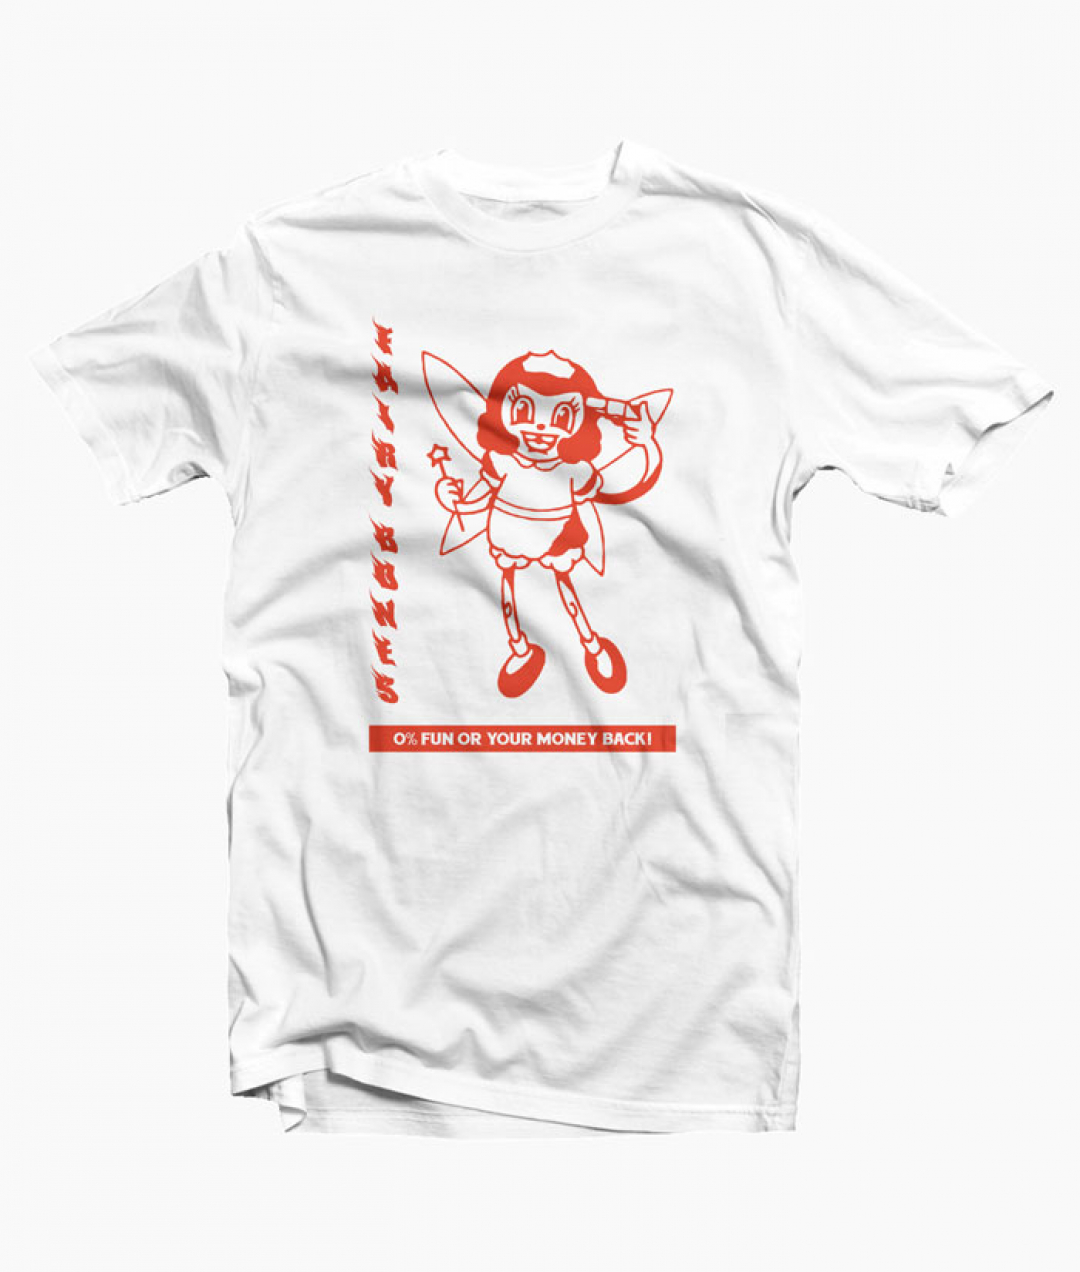 Fun T Shirt 0% Fun Or Your Money Back Graphic Tees For Men Women